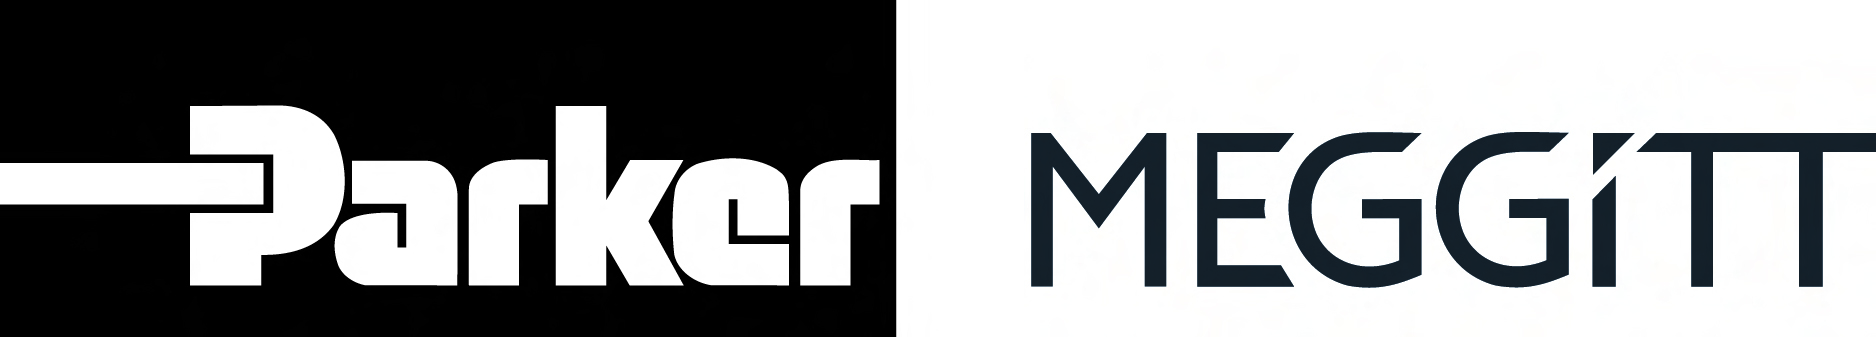 Parker Meggitt logo 